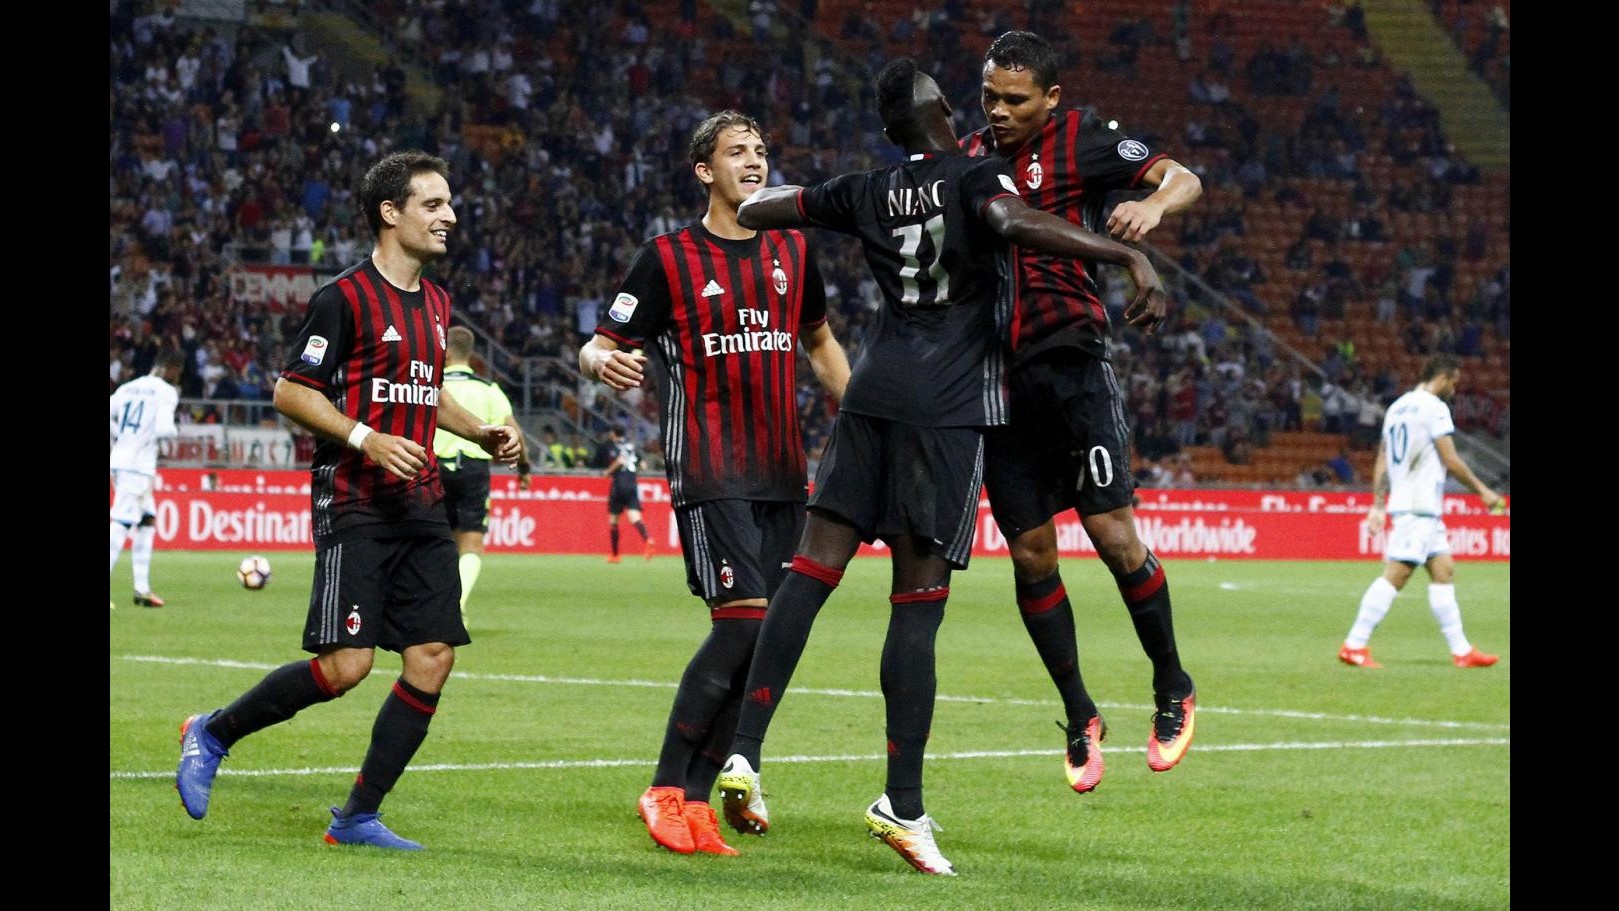 FOTO Milan-Lazio 2-0, a segno Bacca e Niang